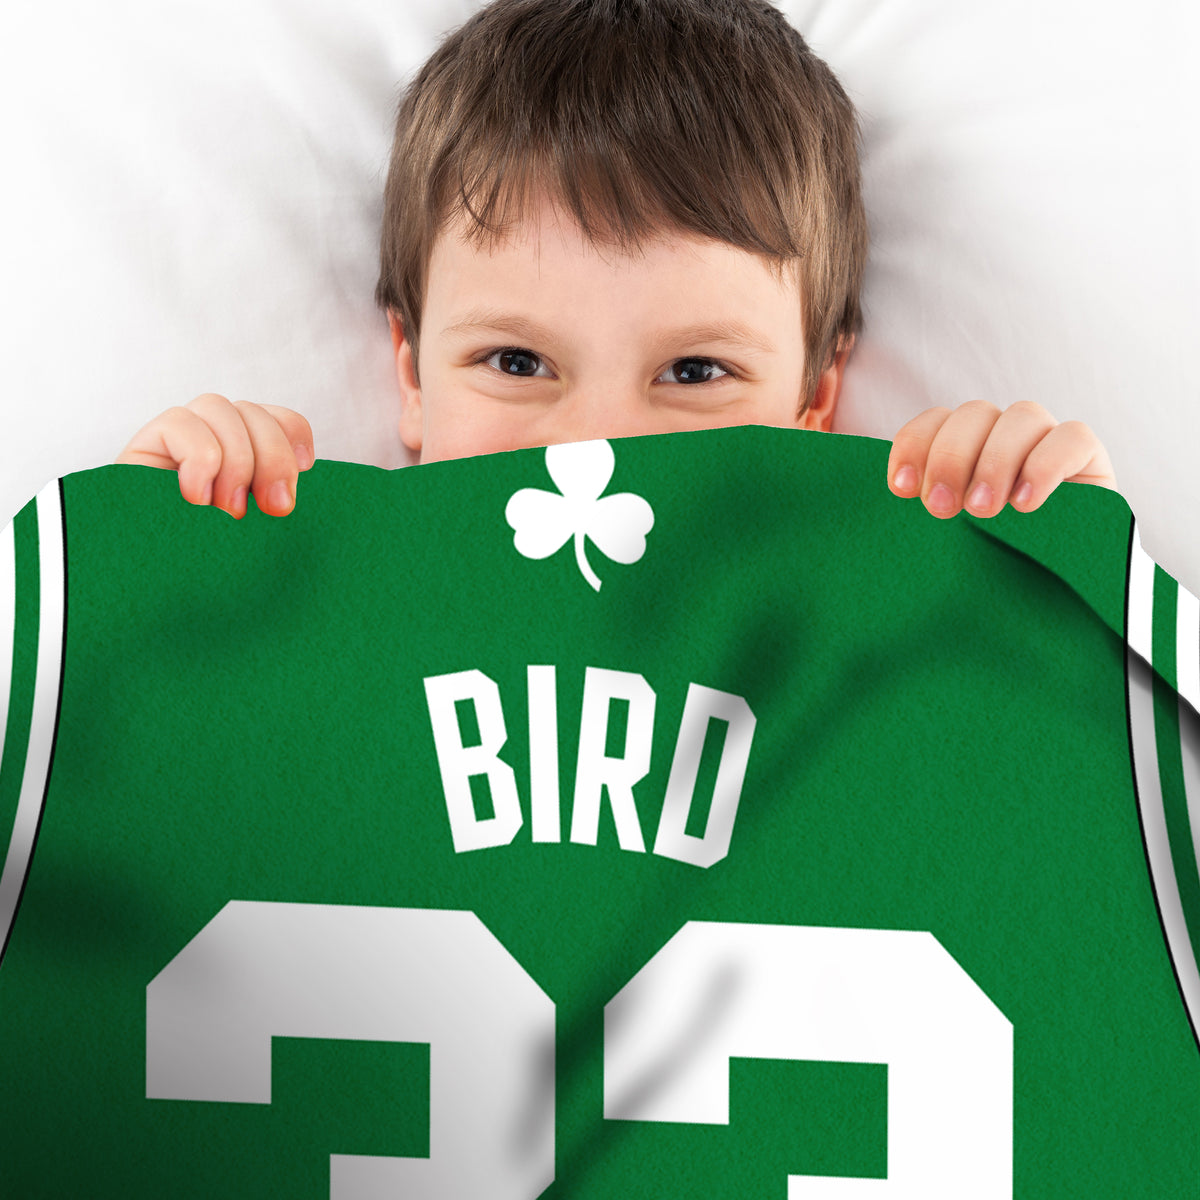 Celtics Larry Bird 60” x 80” Plush Jersey Blanket